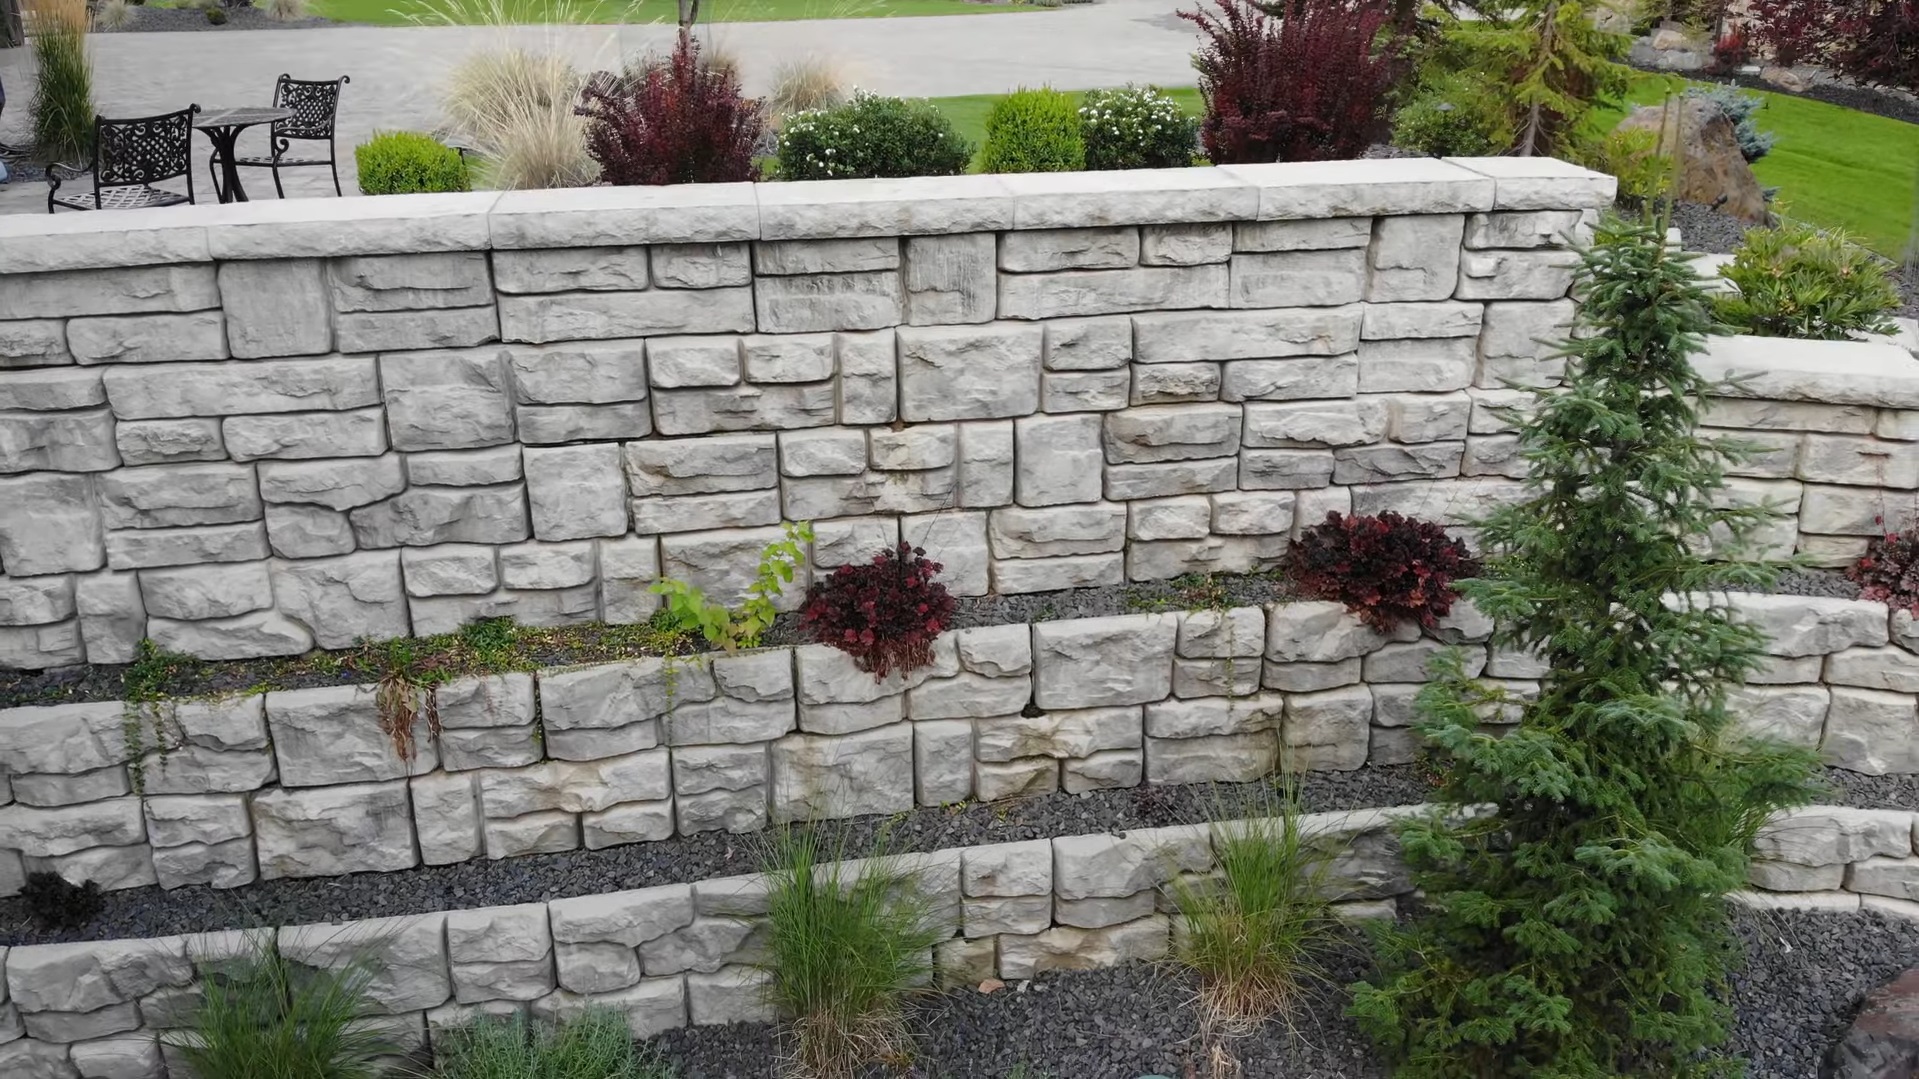 Concrete blocks, high-mass kinds of retaining walls